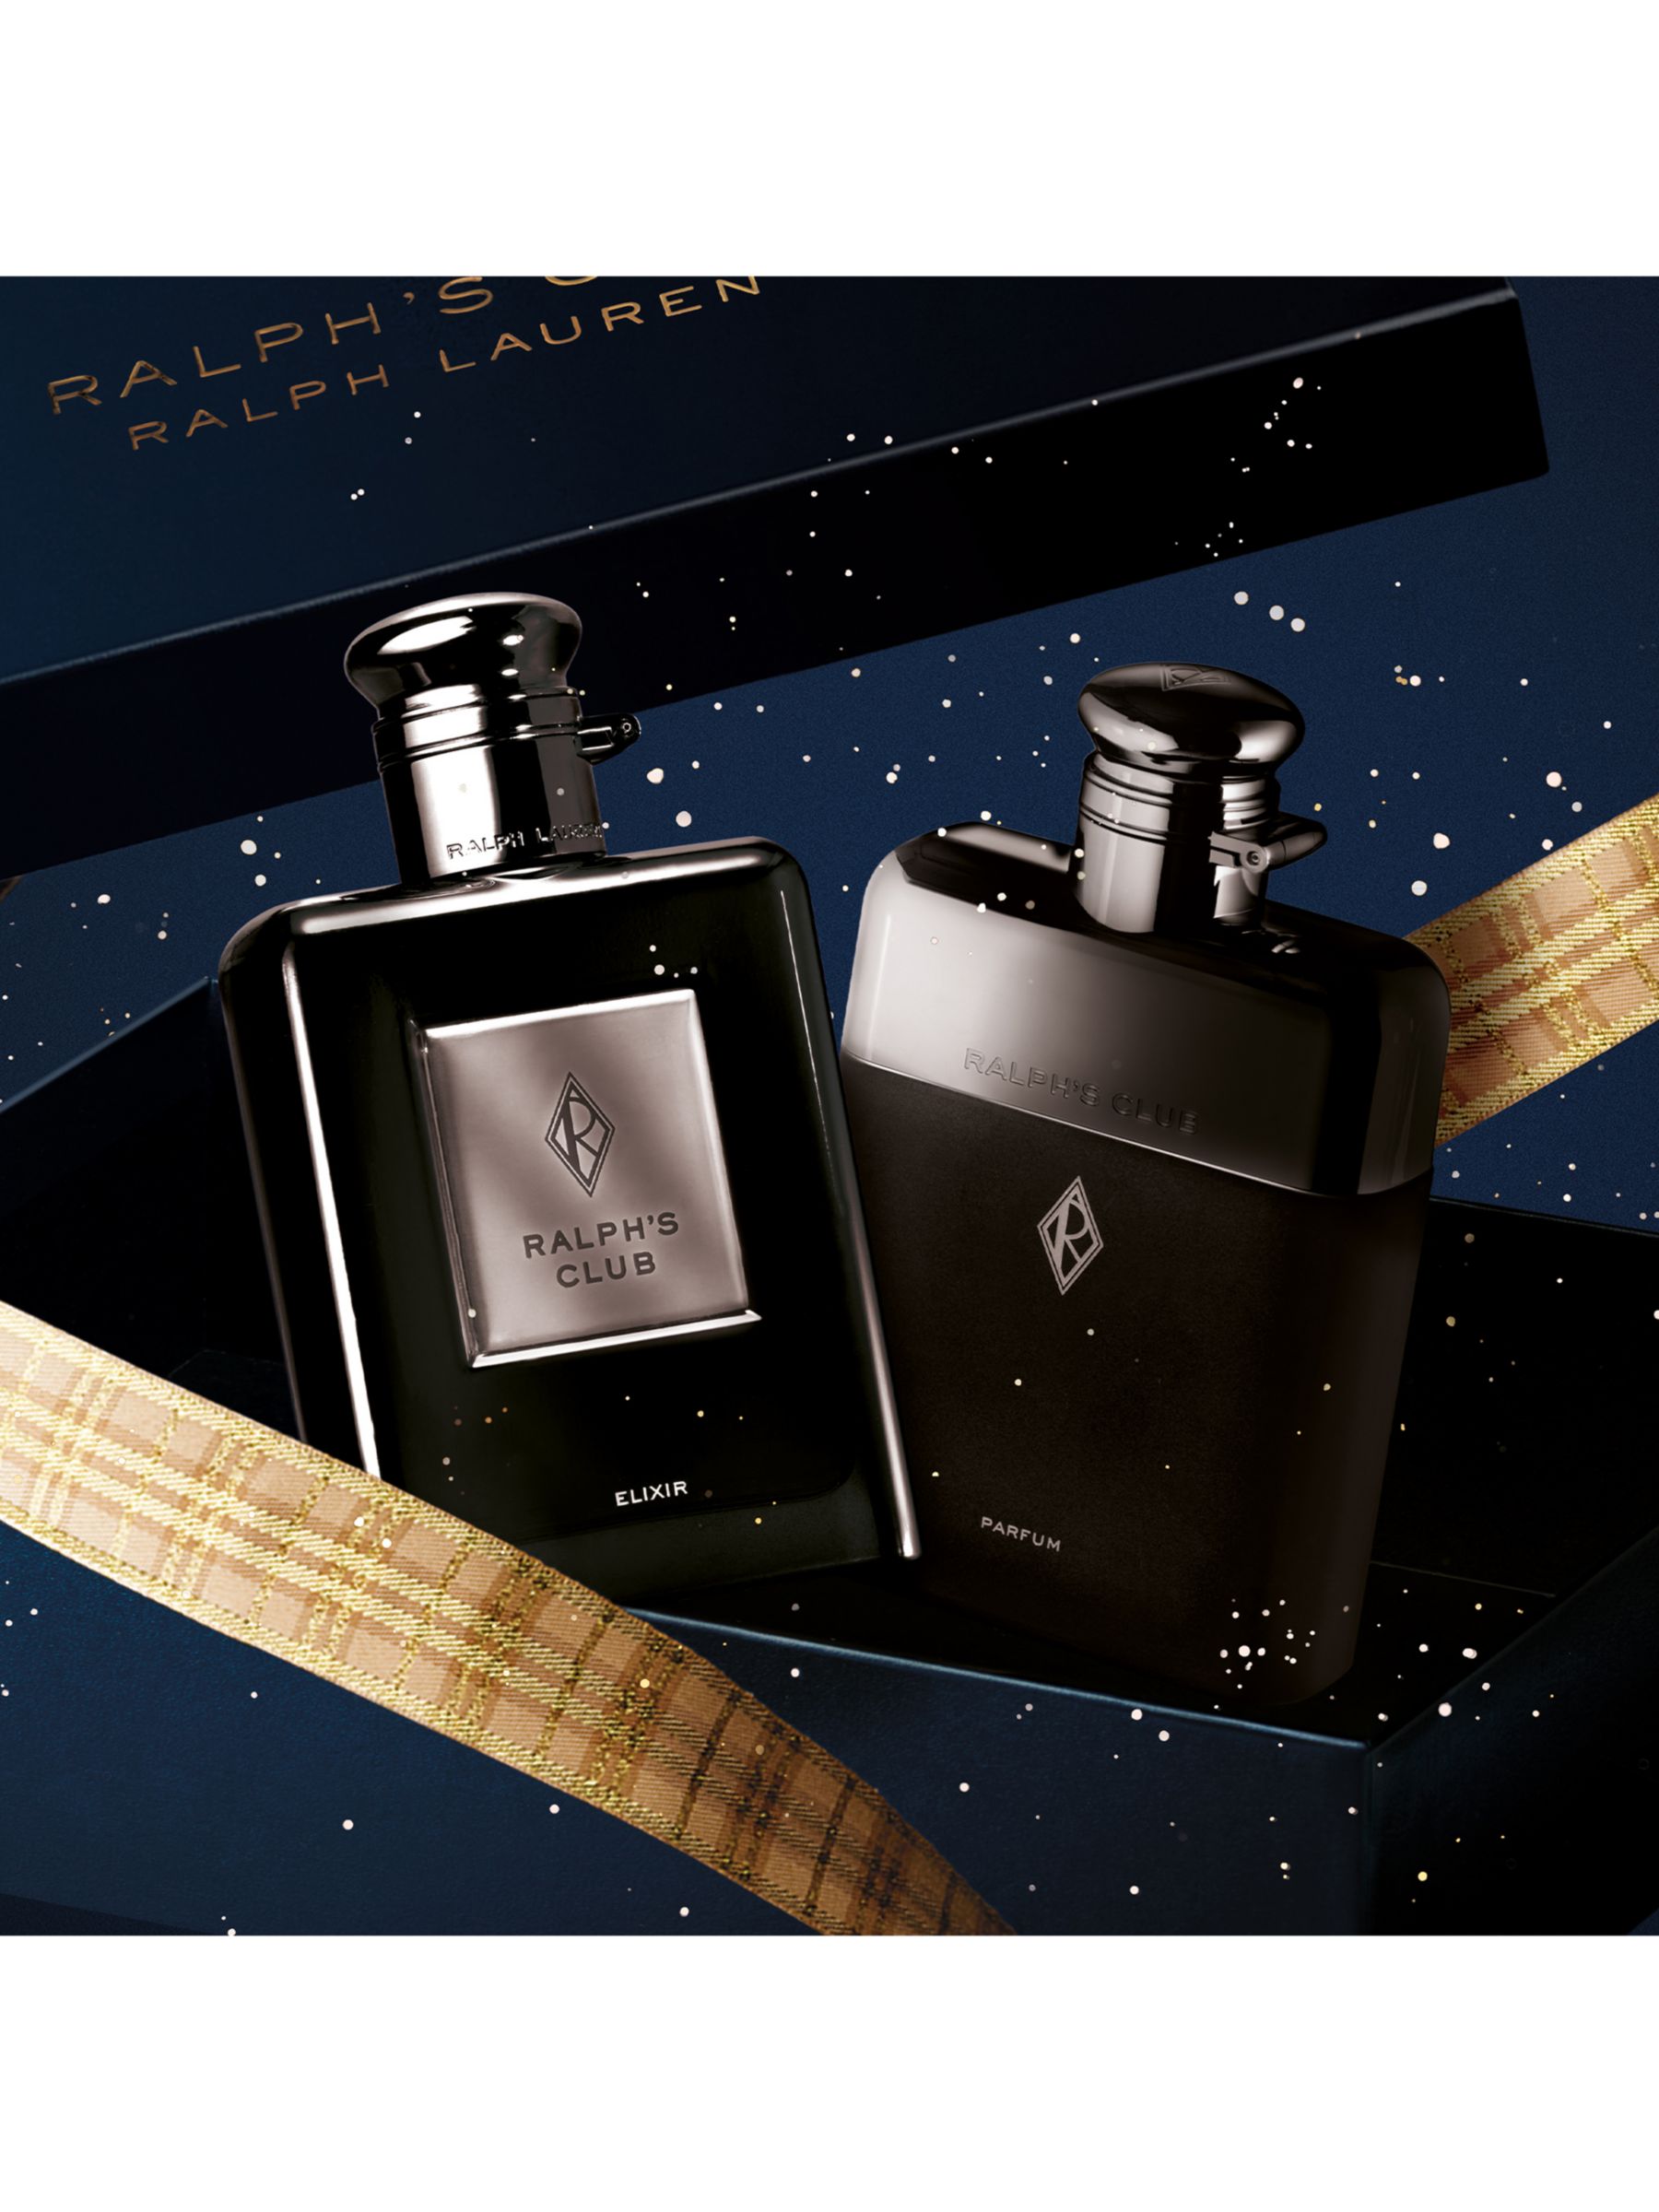 Ralph's Club Elixir Ralph Lauren for Men - I Fragrance Official